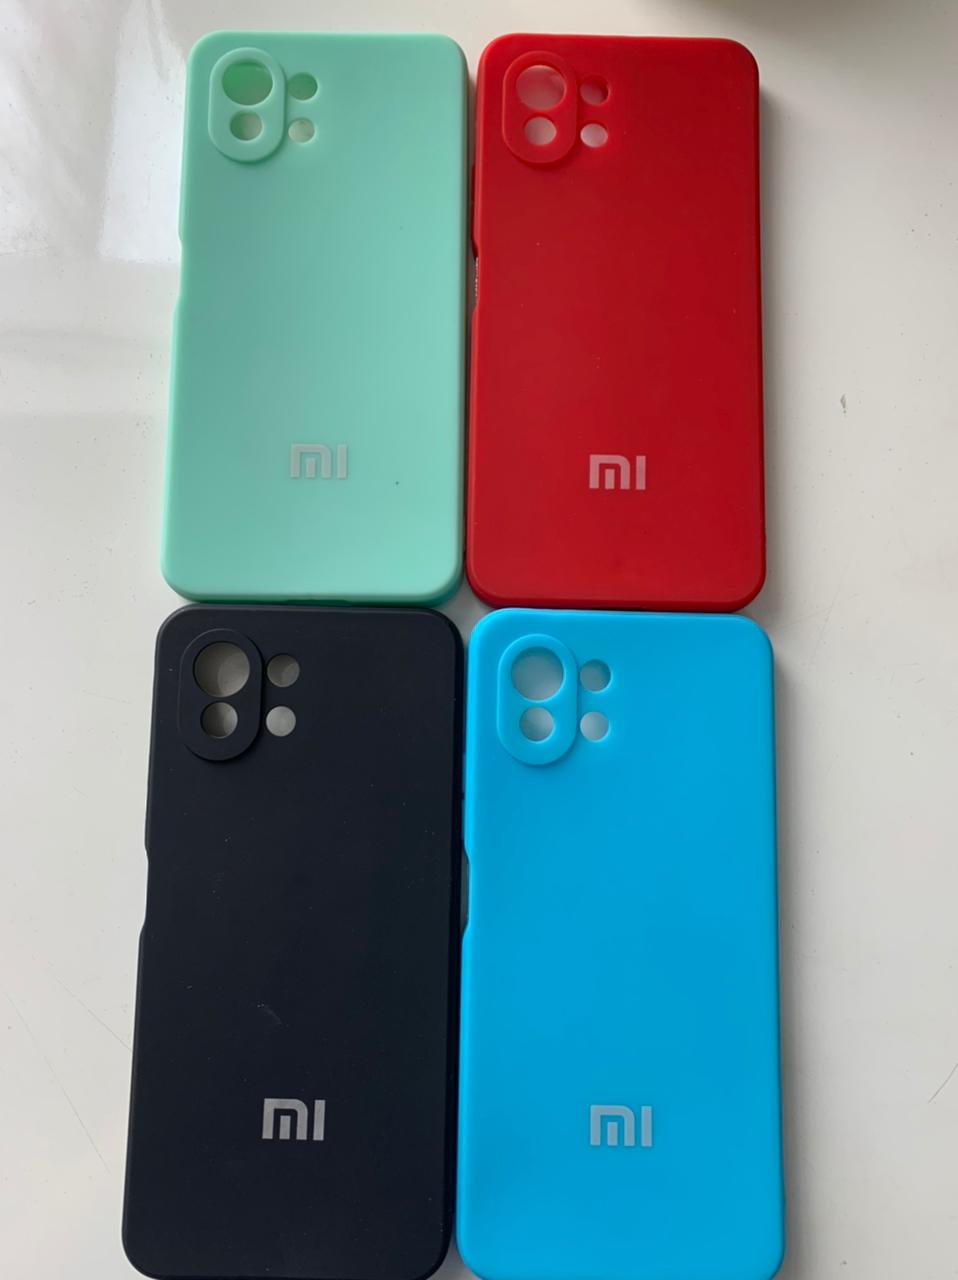 Capa Case Xiaomi MI 11 Lite  - Capinhas para Celular - Diversas Cores  - Central - unidade            Cod. CP Case MI 11 Lite